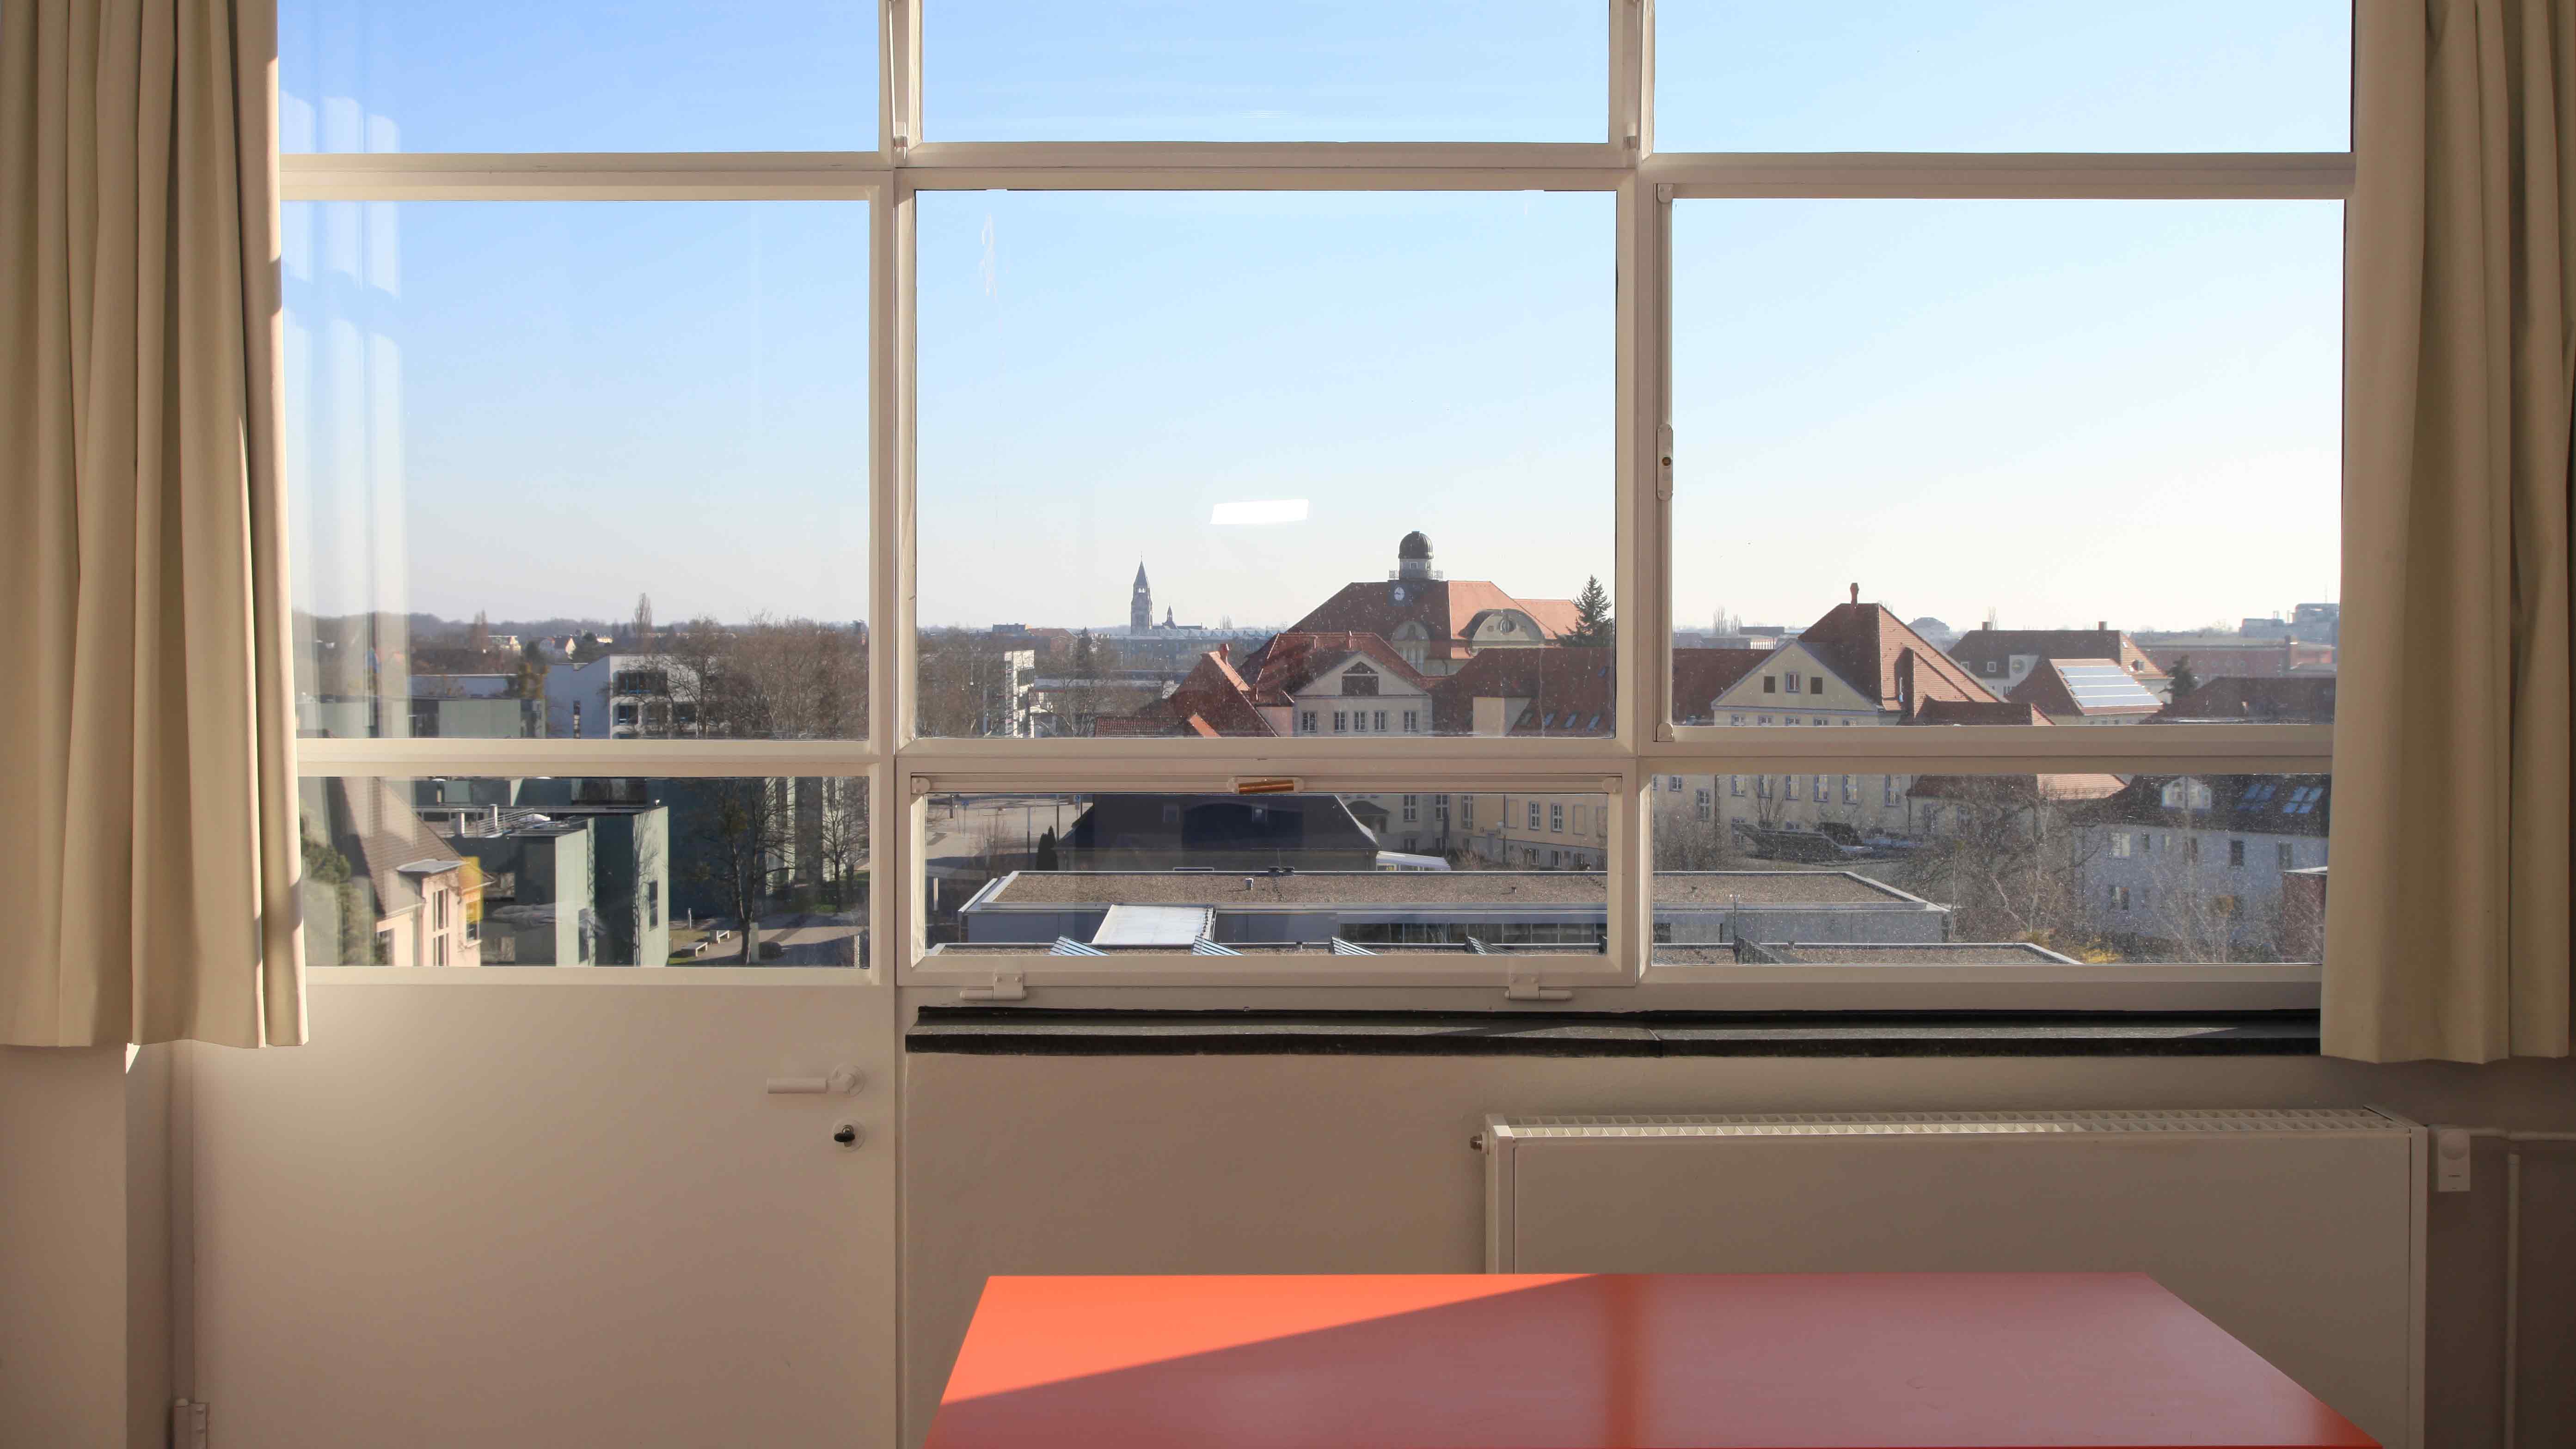 Bauhaus Dessau Atelier building with steel glazed windows in a room